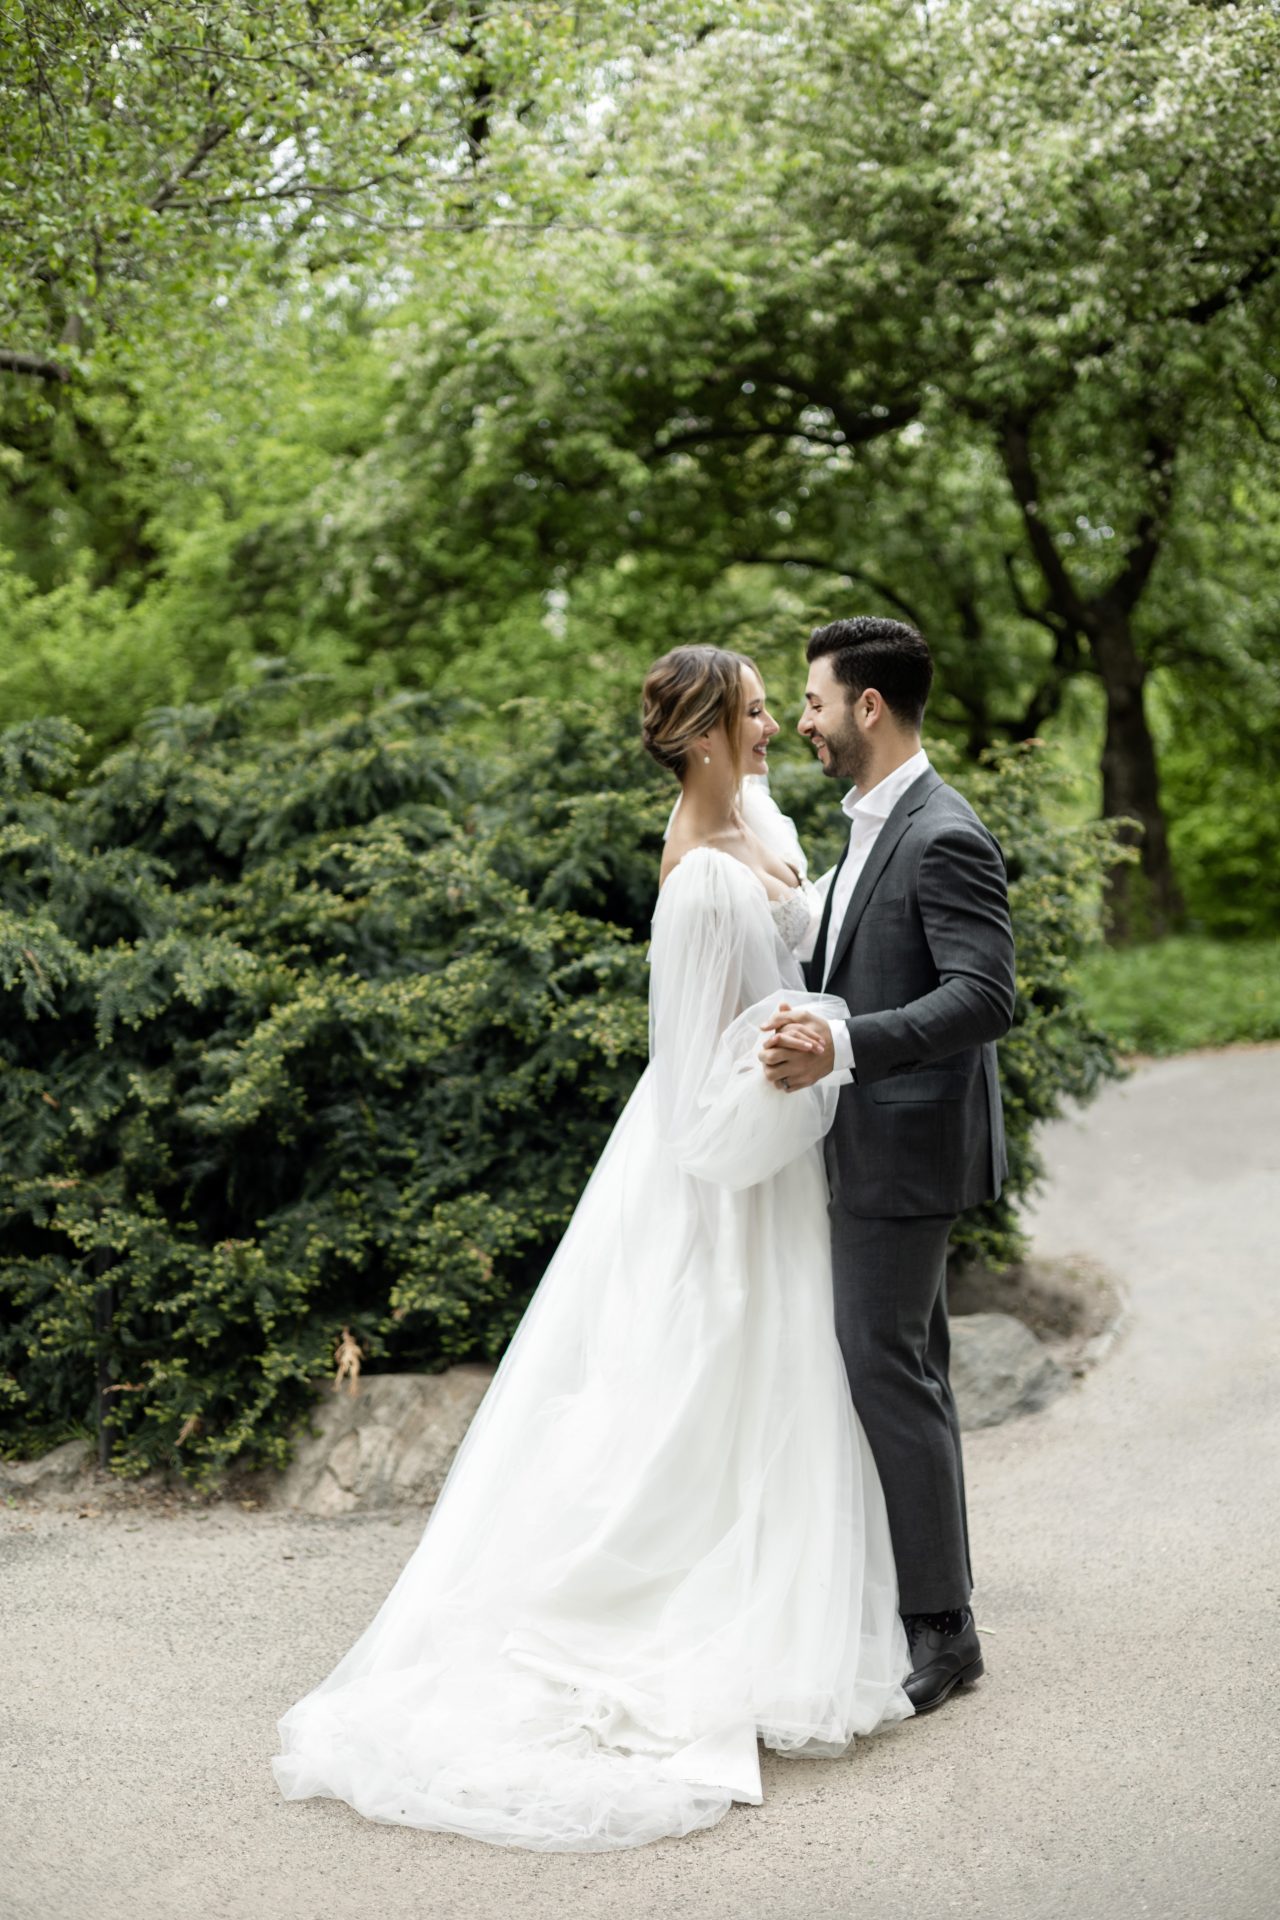 simple wedding central park nyc 18